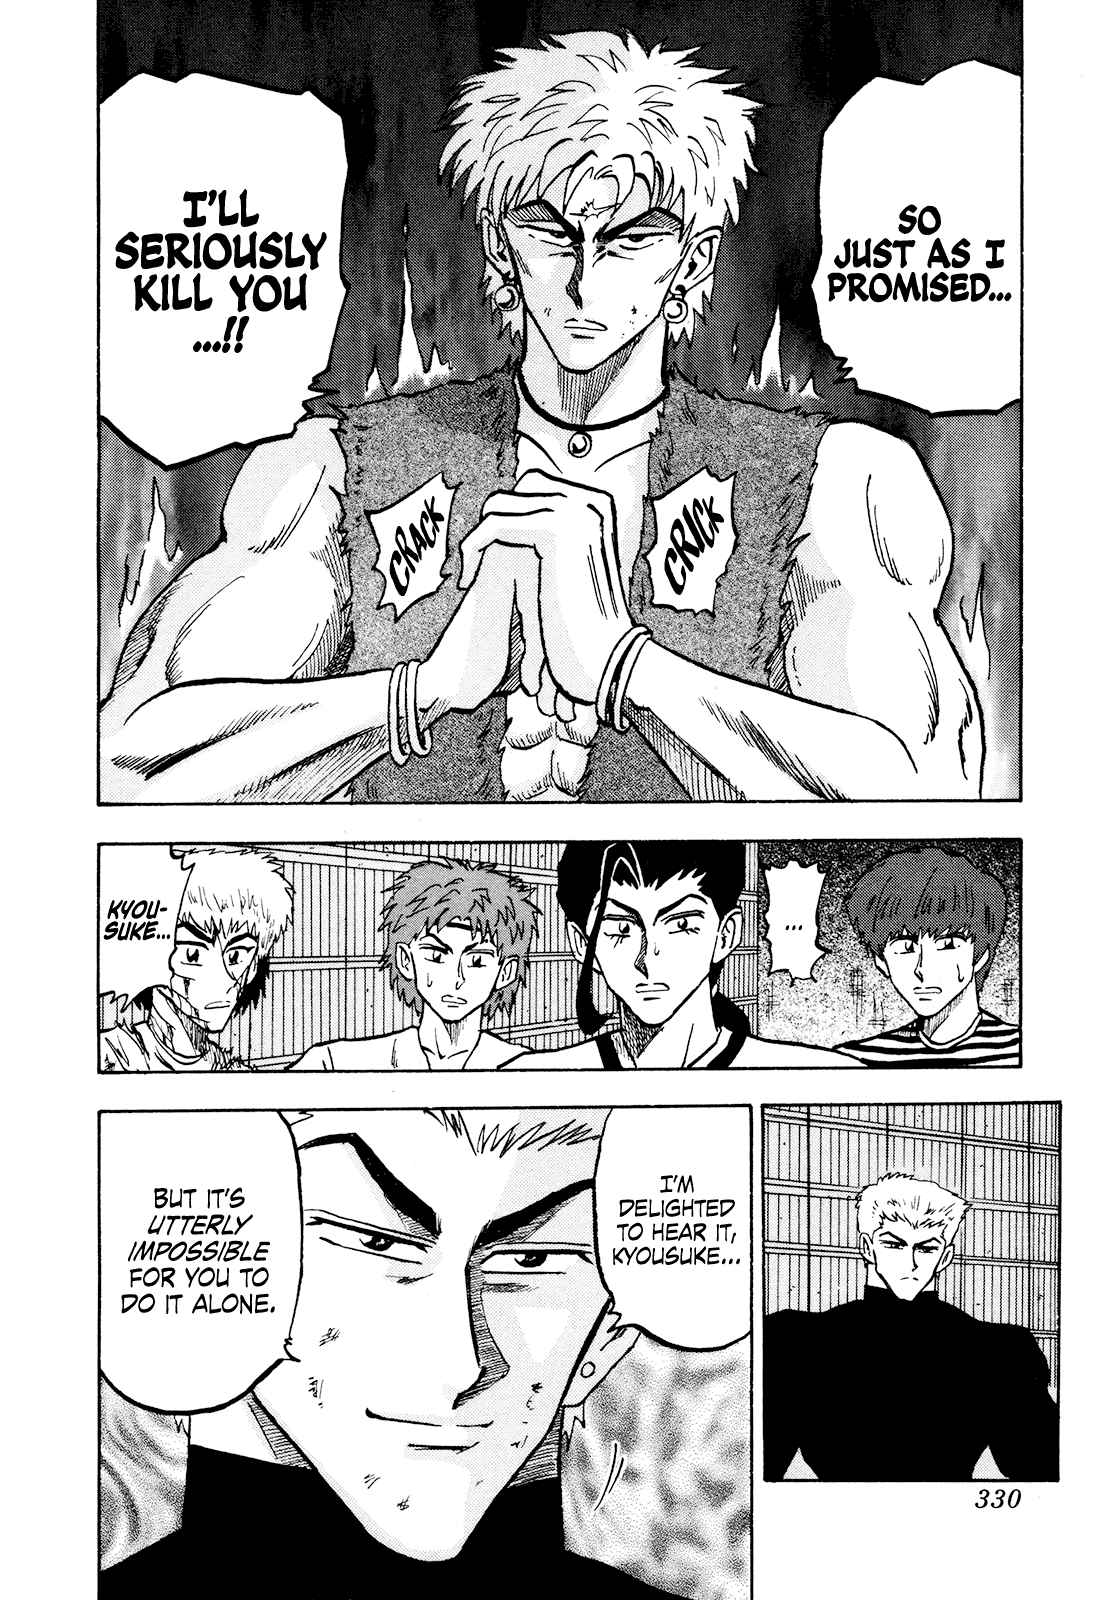 Seikimatsu Leader Den Takeshi! Vol. 4 Ch. 72 Tony's Pride...!!